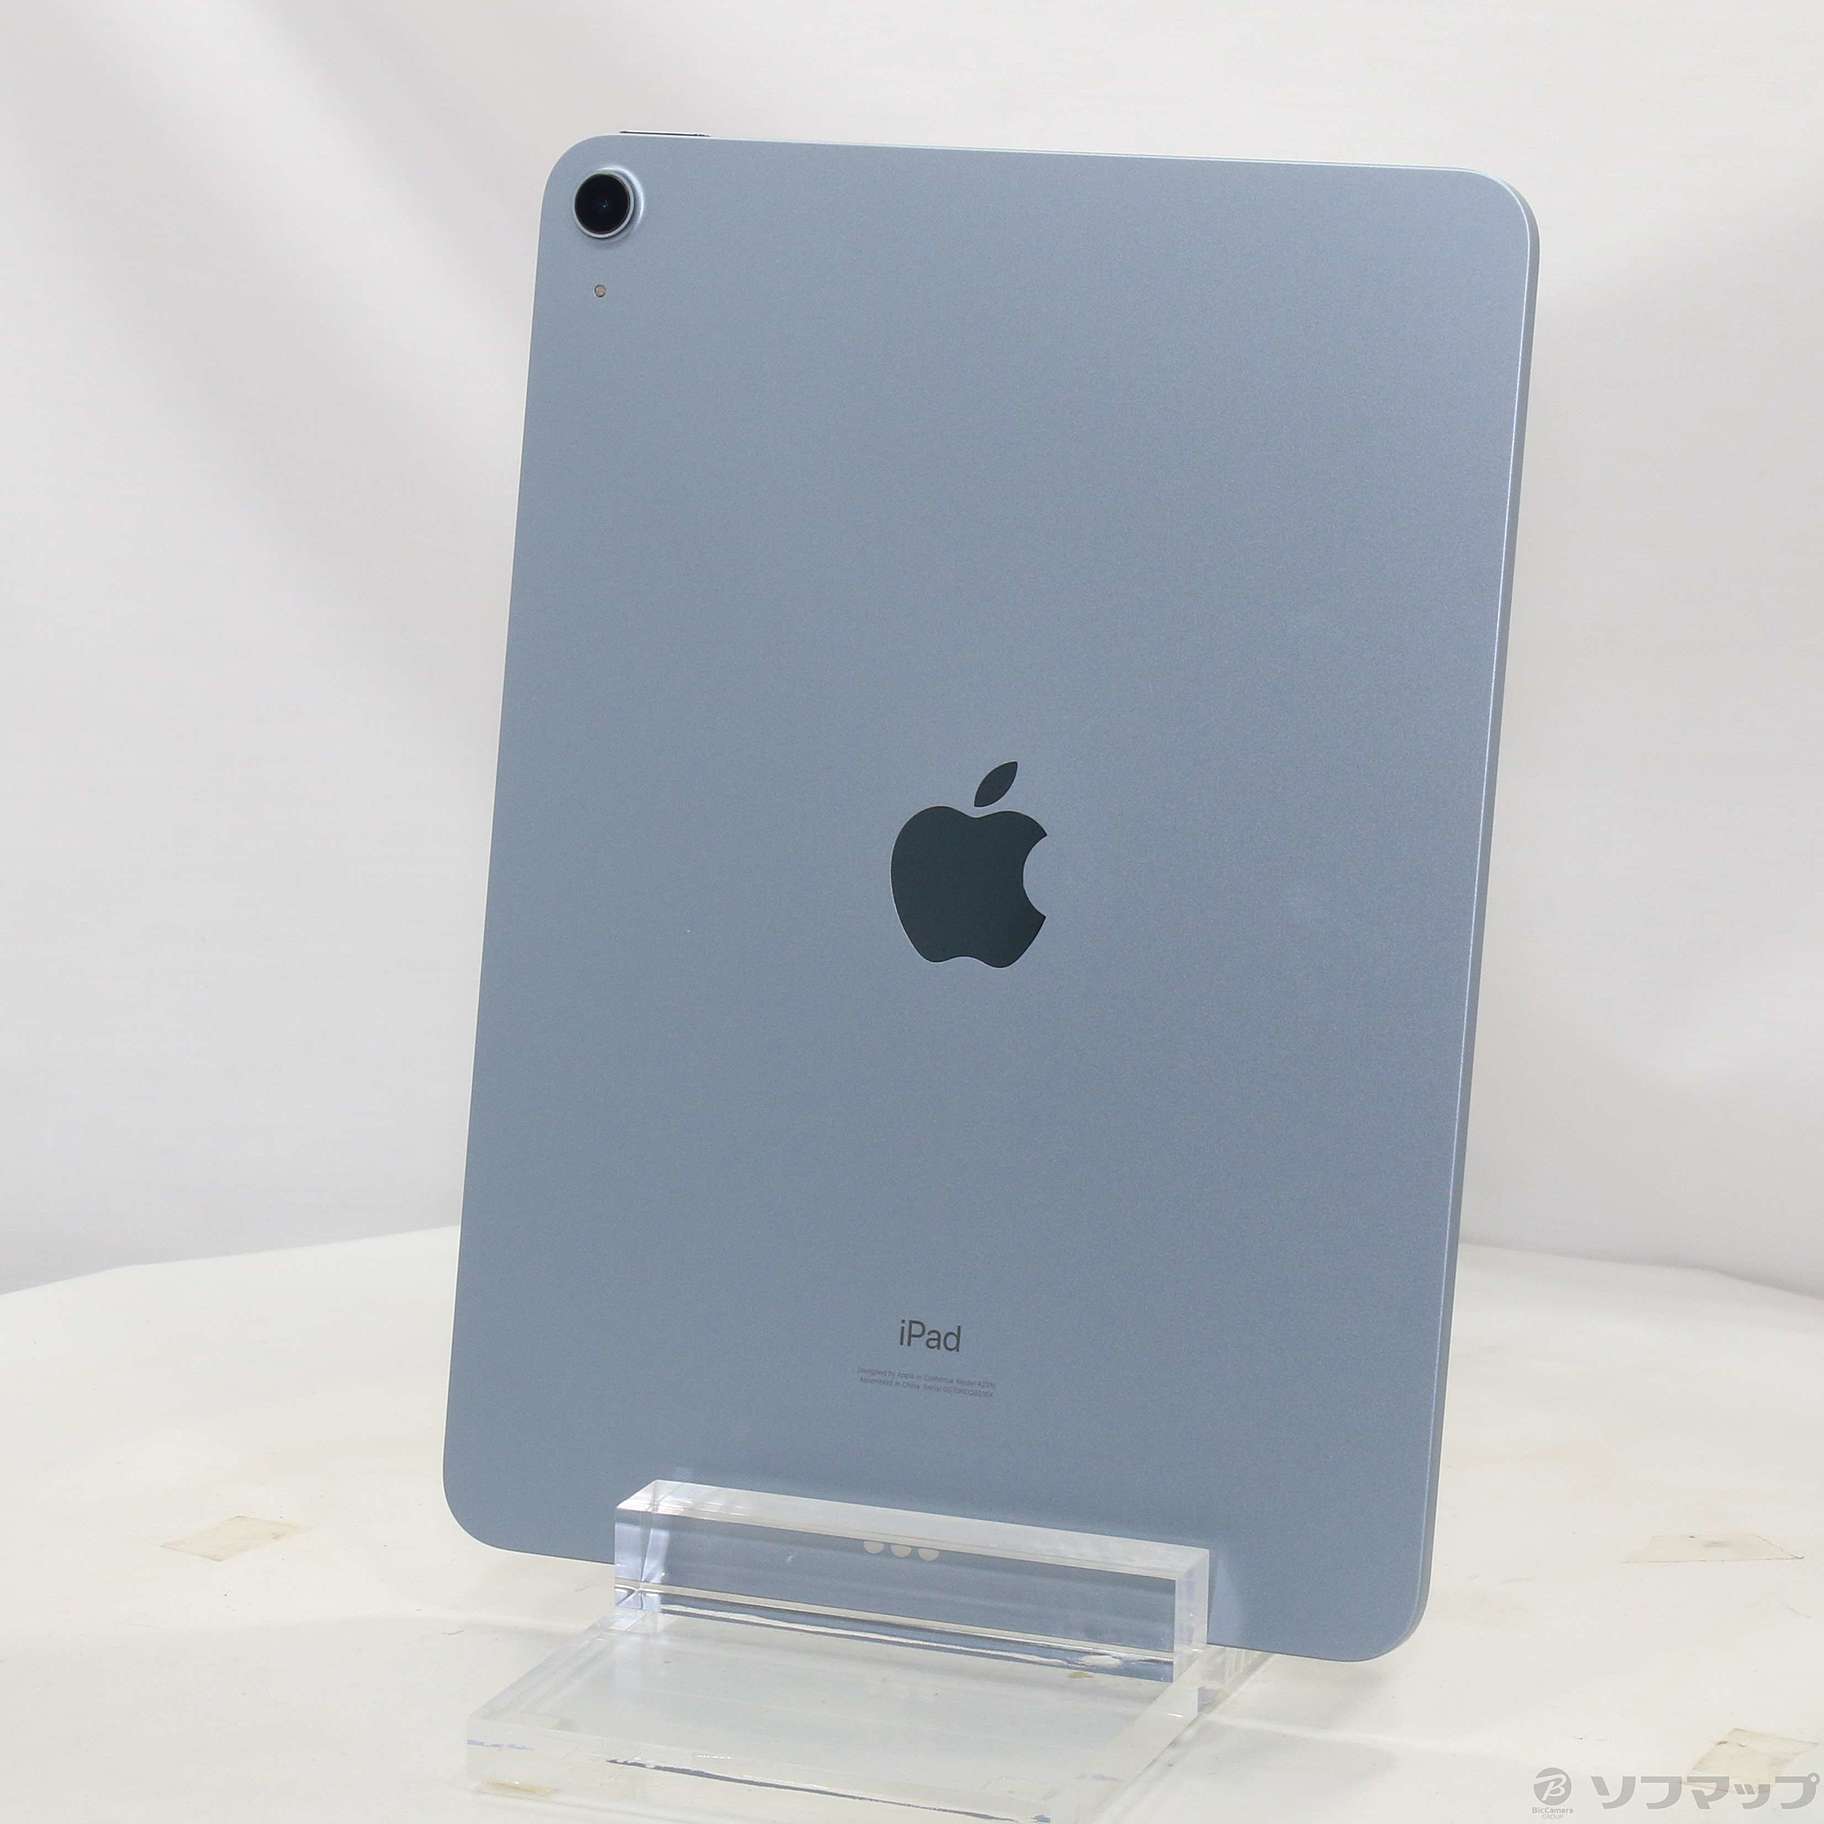 iPad Air 4 256GB wifiモデル - スカイブルー